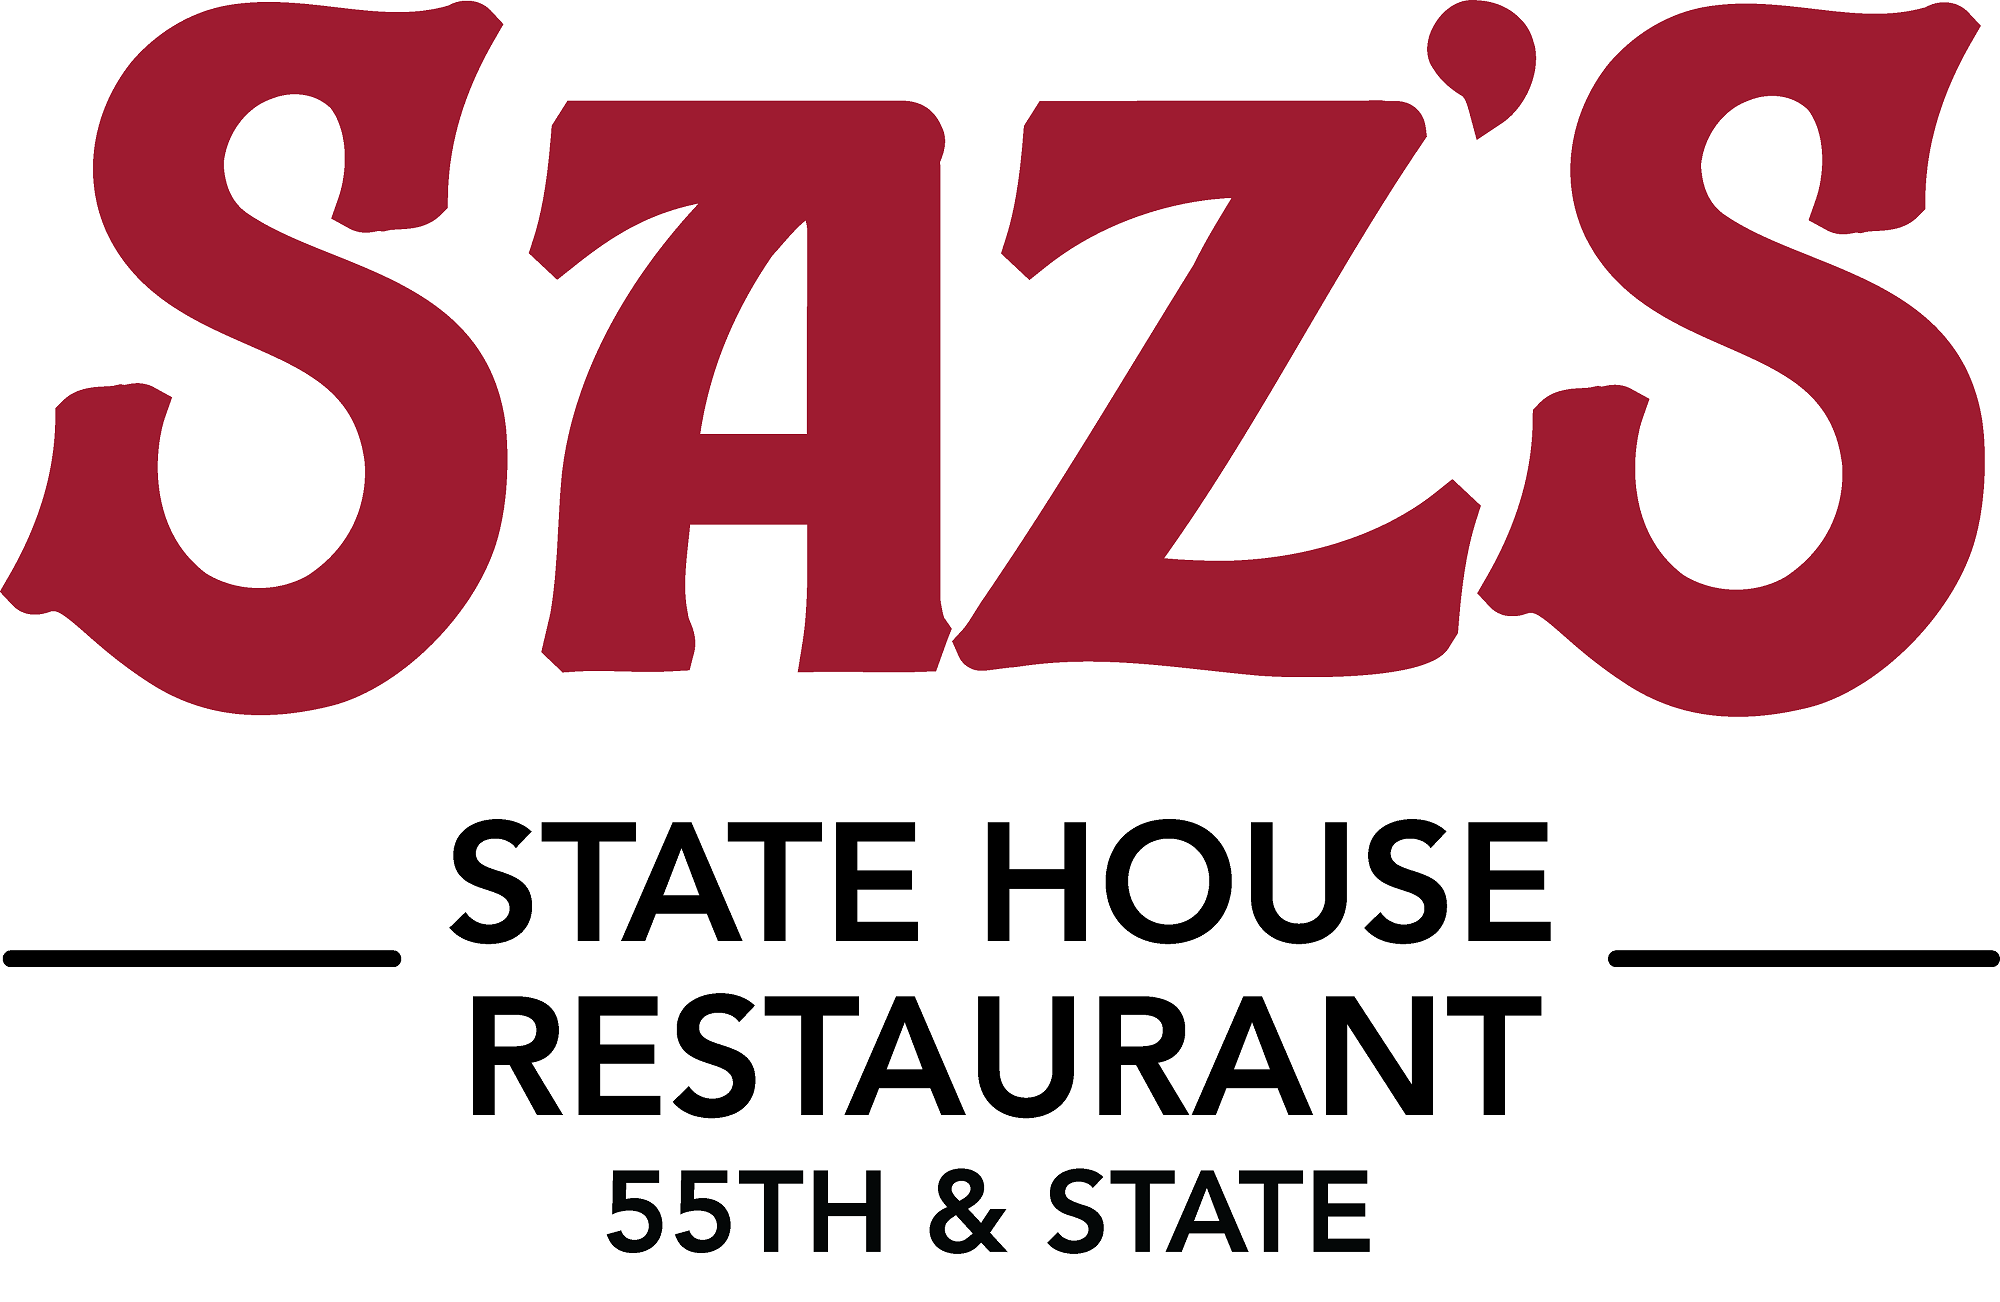 SAZ'S STATE HOUSE RESTAURANT: 55th & State